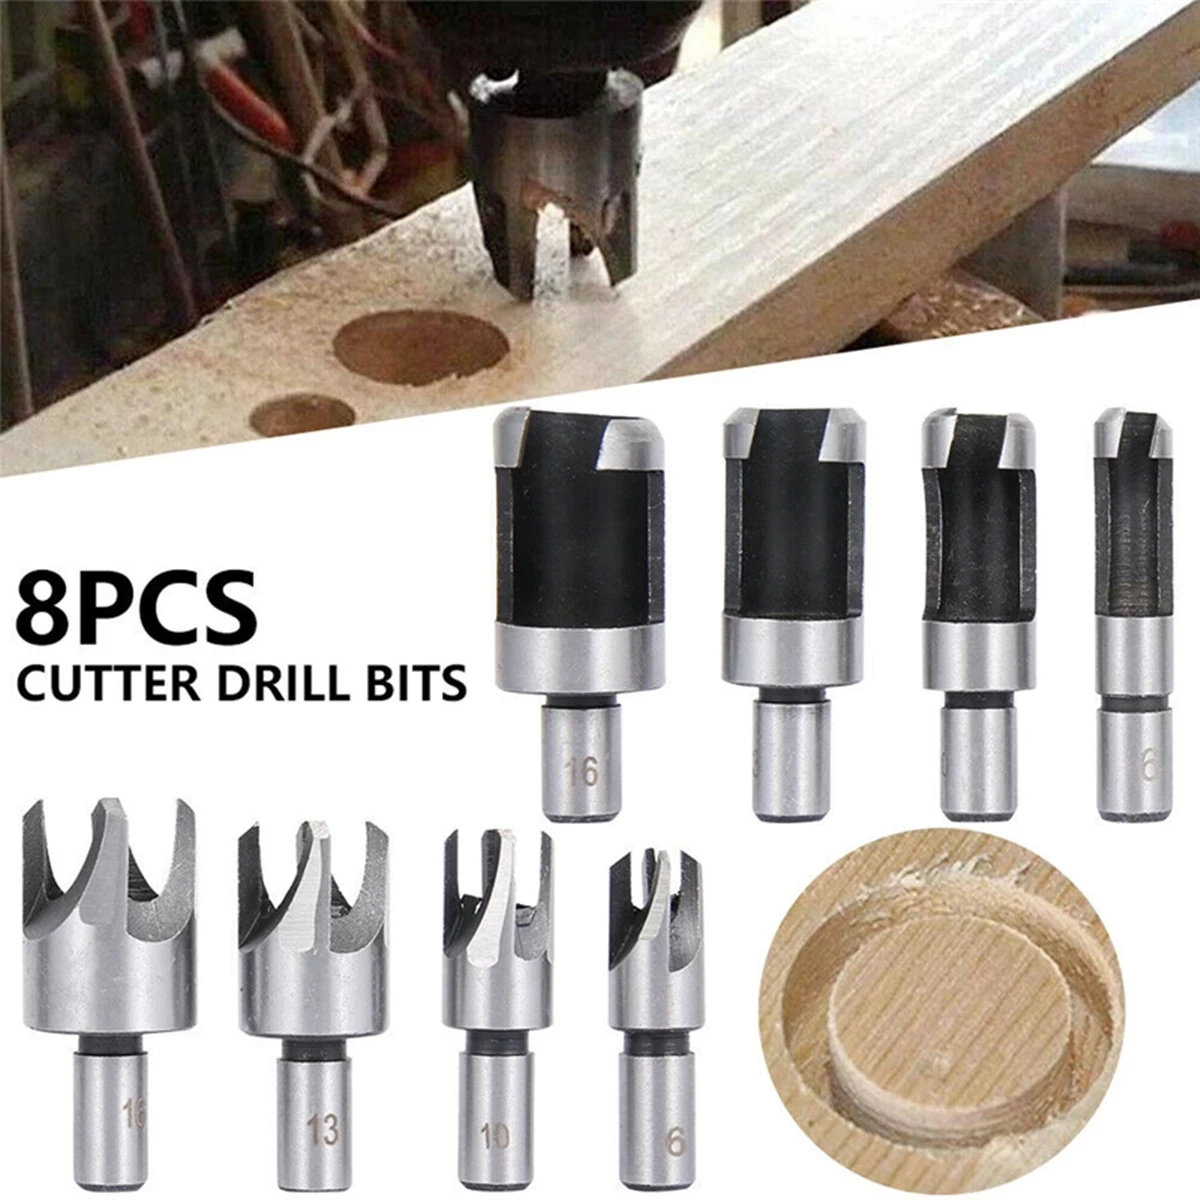 8PCS Wood Plug Hole Cutter Drill Bits Set Dowel Maker Cutting Tools Round Shank